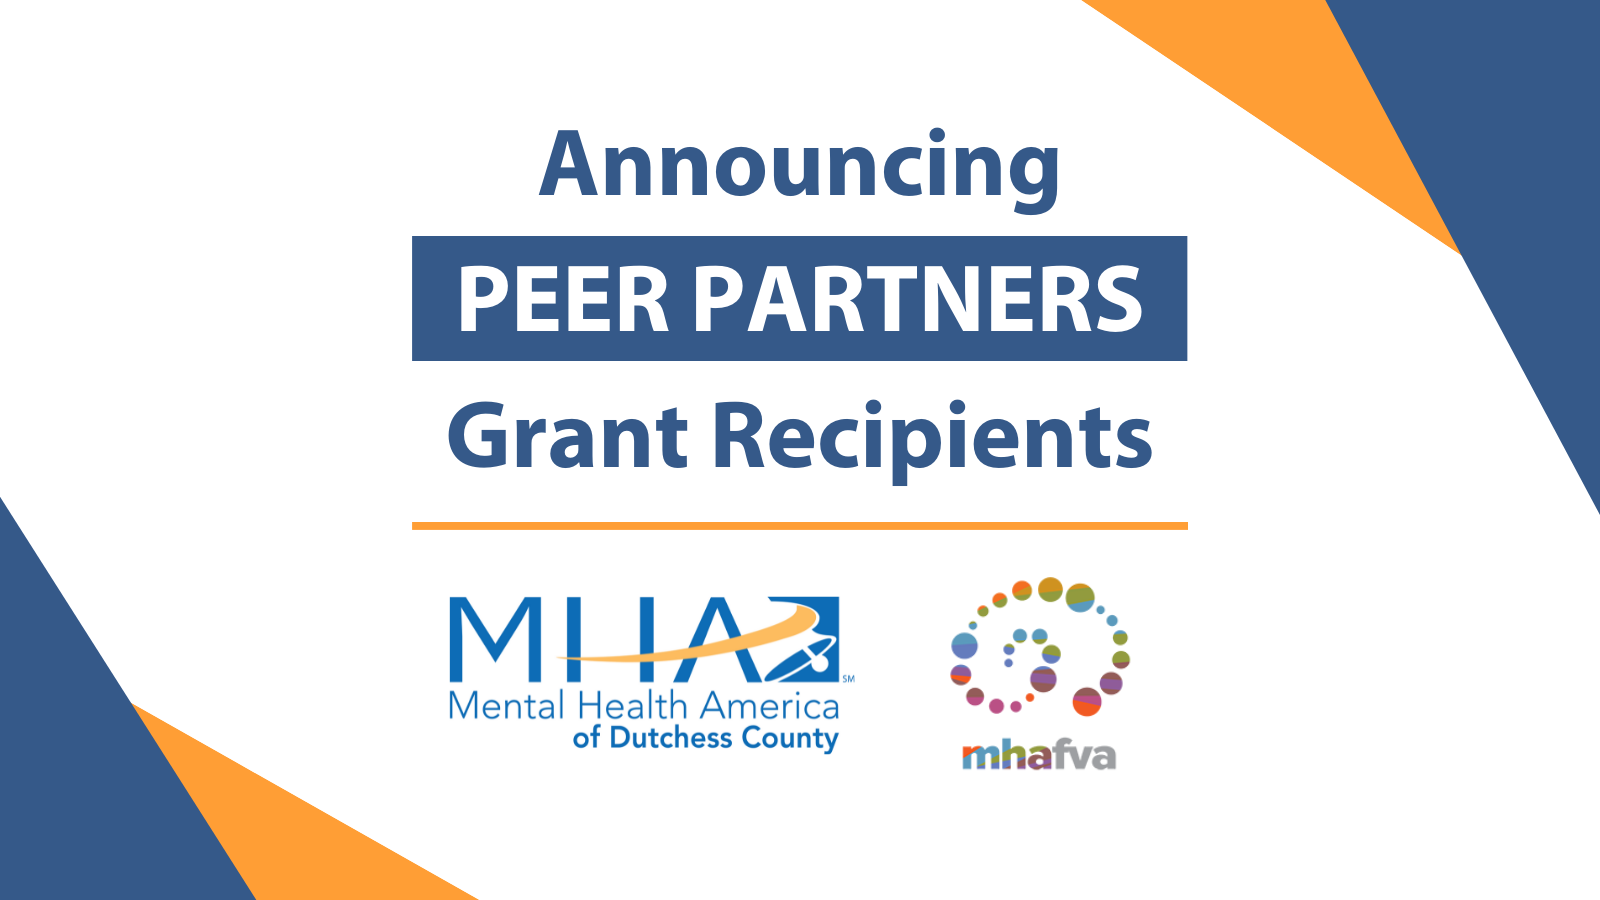 Text saying "Announcing Peer Partners Grant Recipients" highlighting MHA logos.